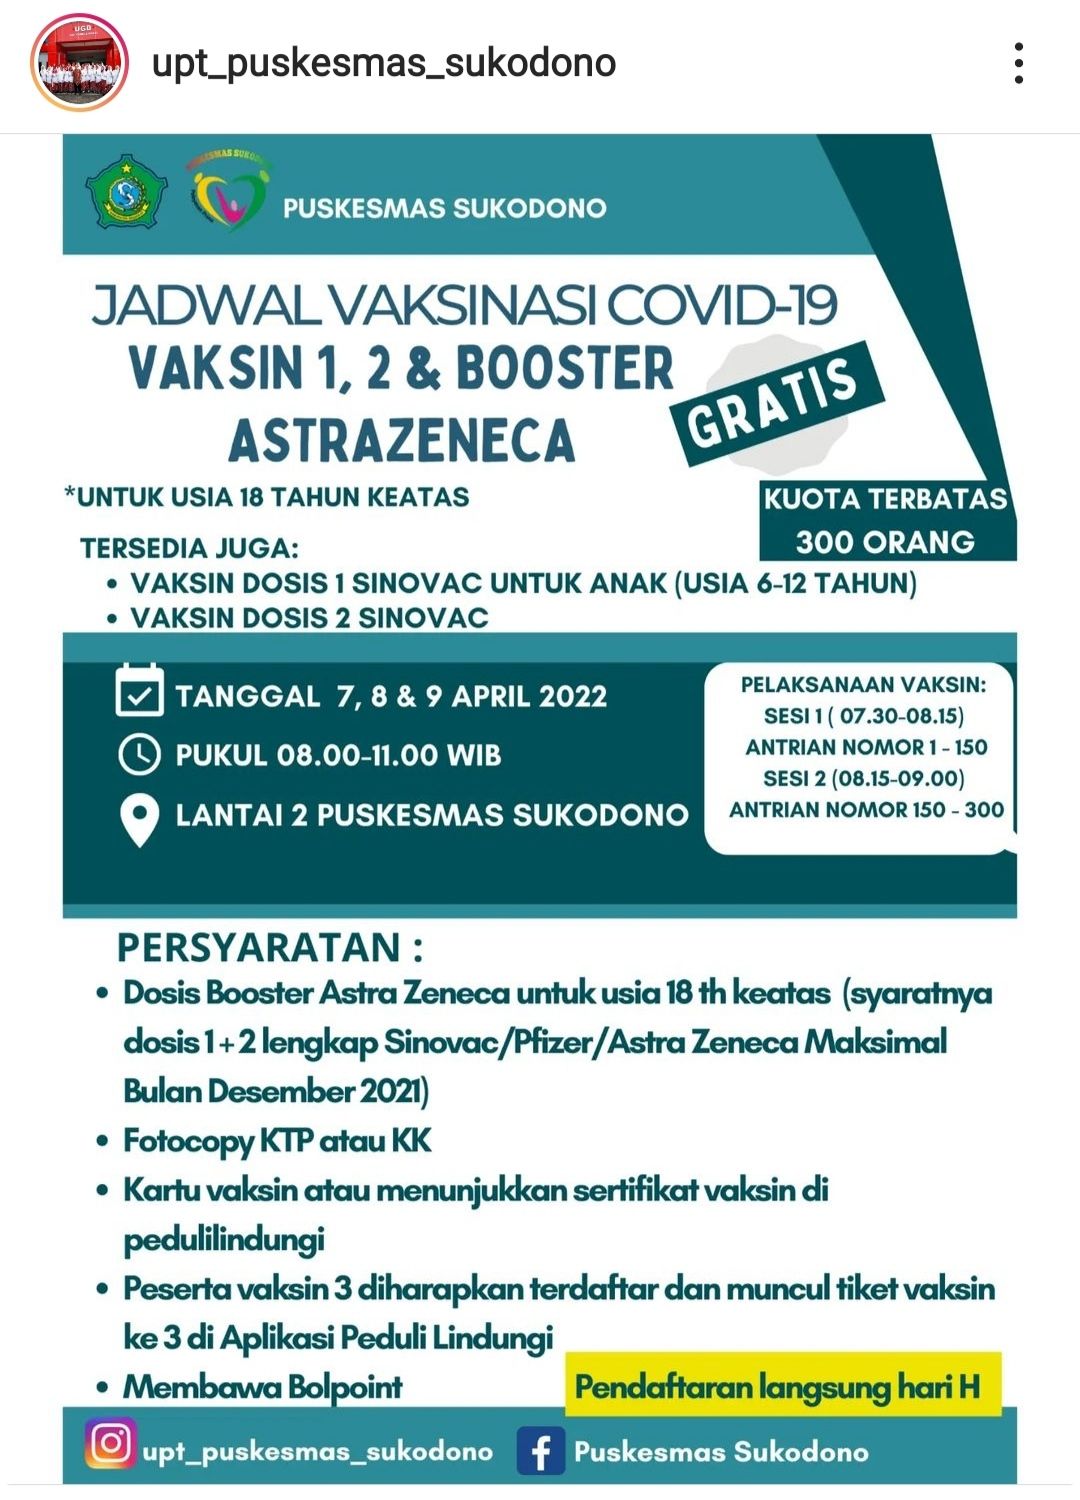 Vaksin Booster, AstraZeneca, dan Vaksin Anak Sinovac, dilaksanakan di Sidoarjo 7-9 April 2022, Berikut Jadwal Ketentuannya